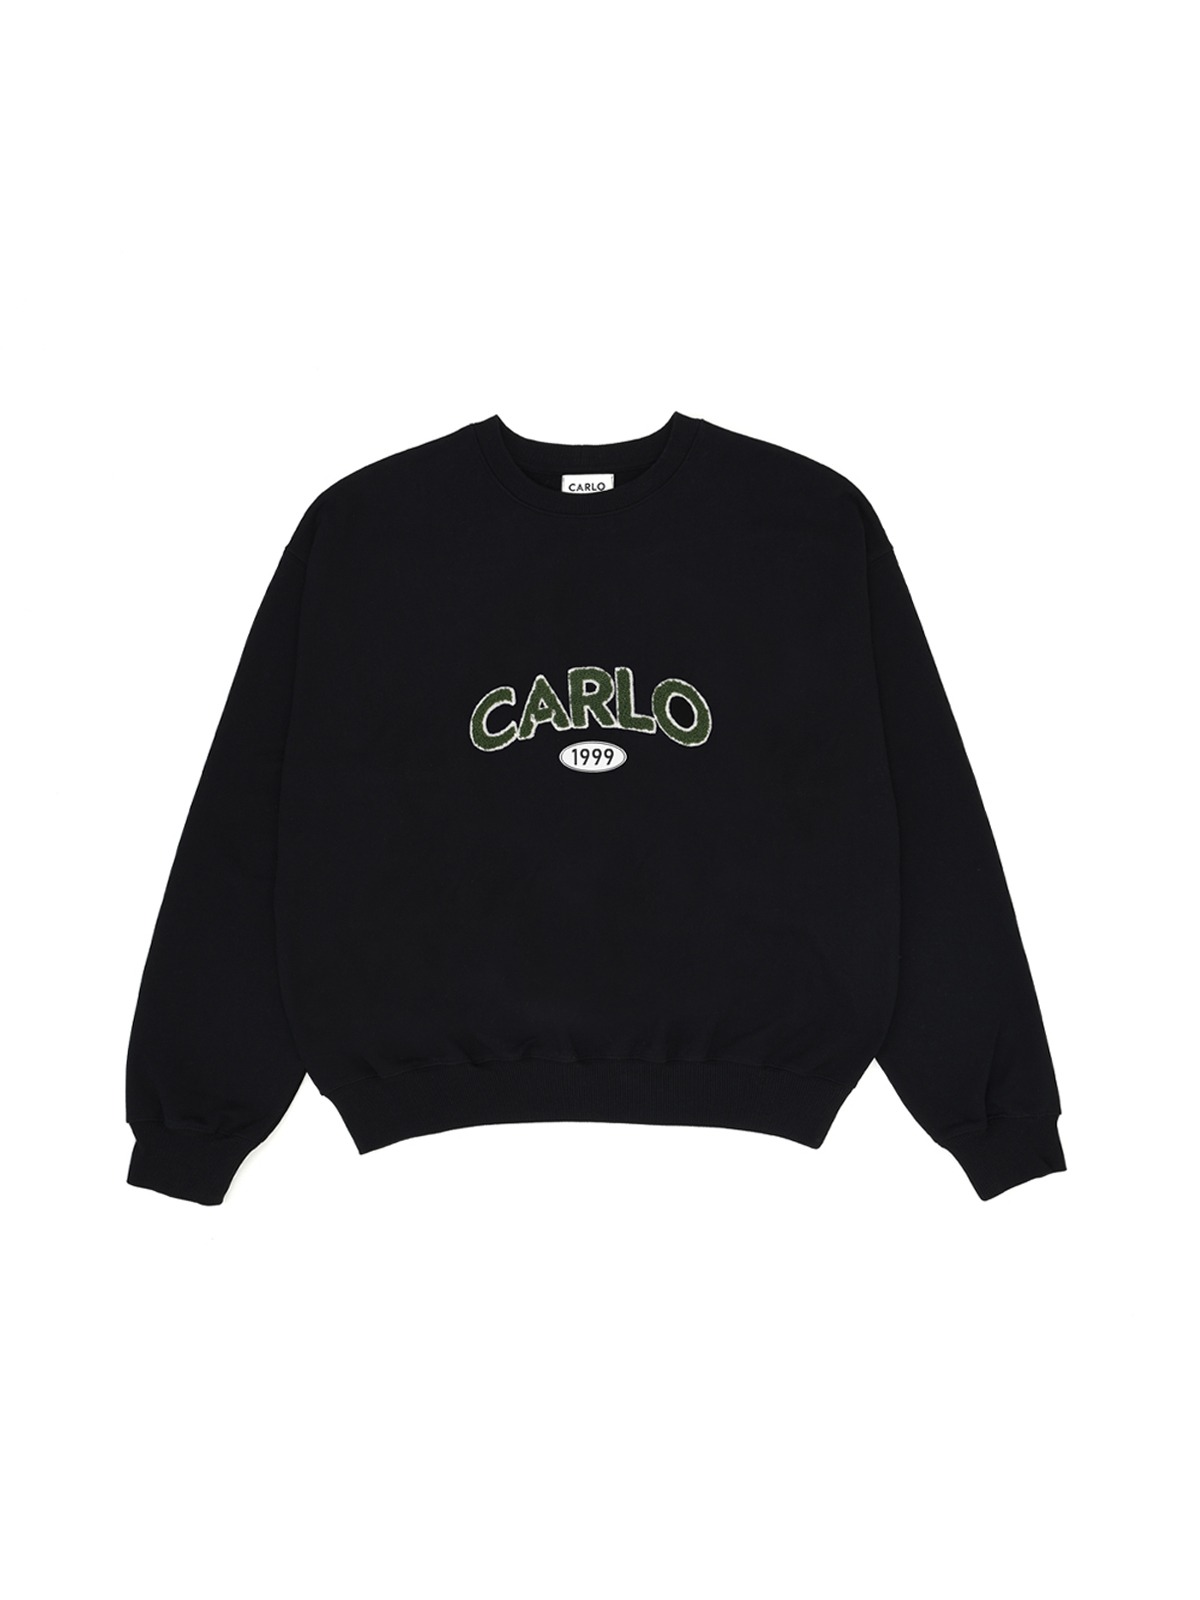 arch CARLO 1999 Sweatshirts Black